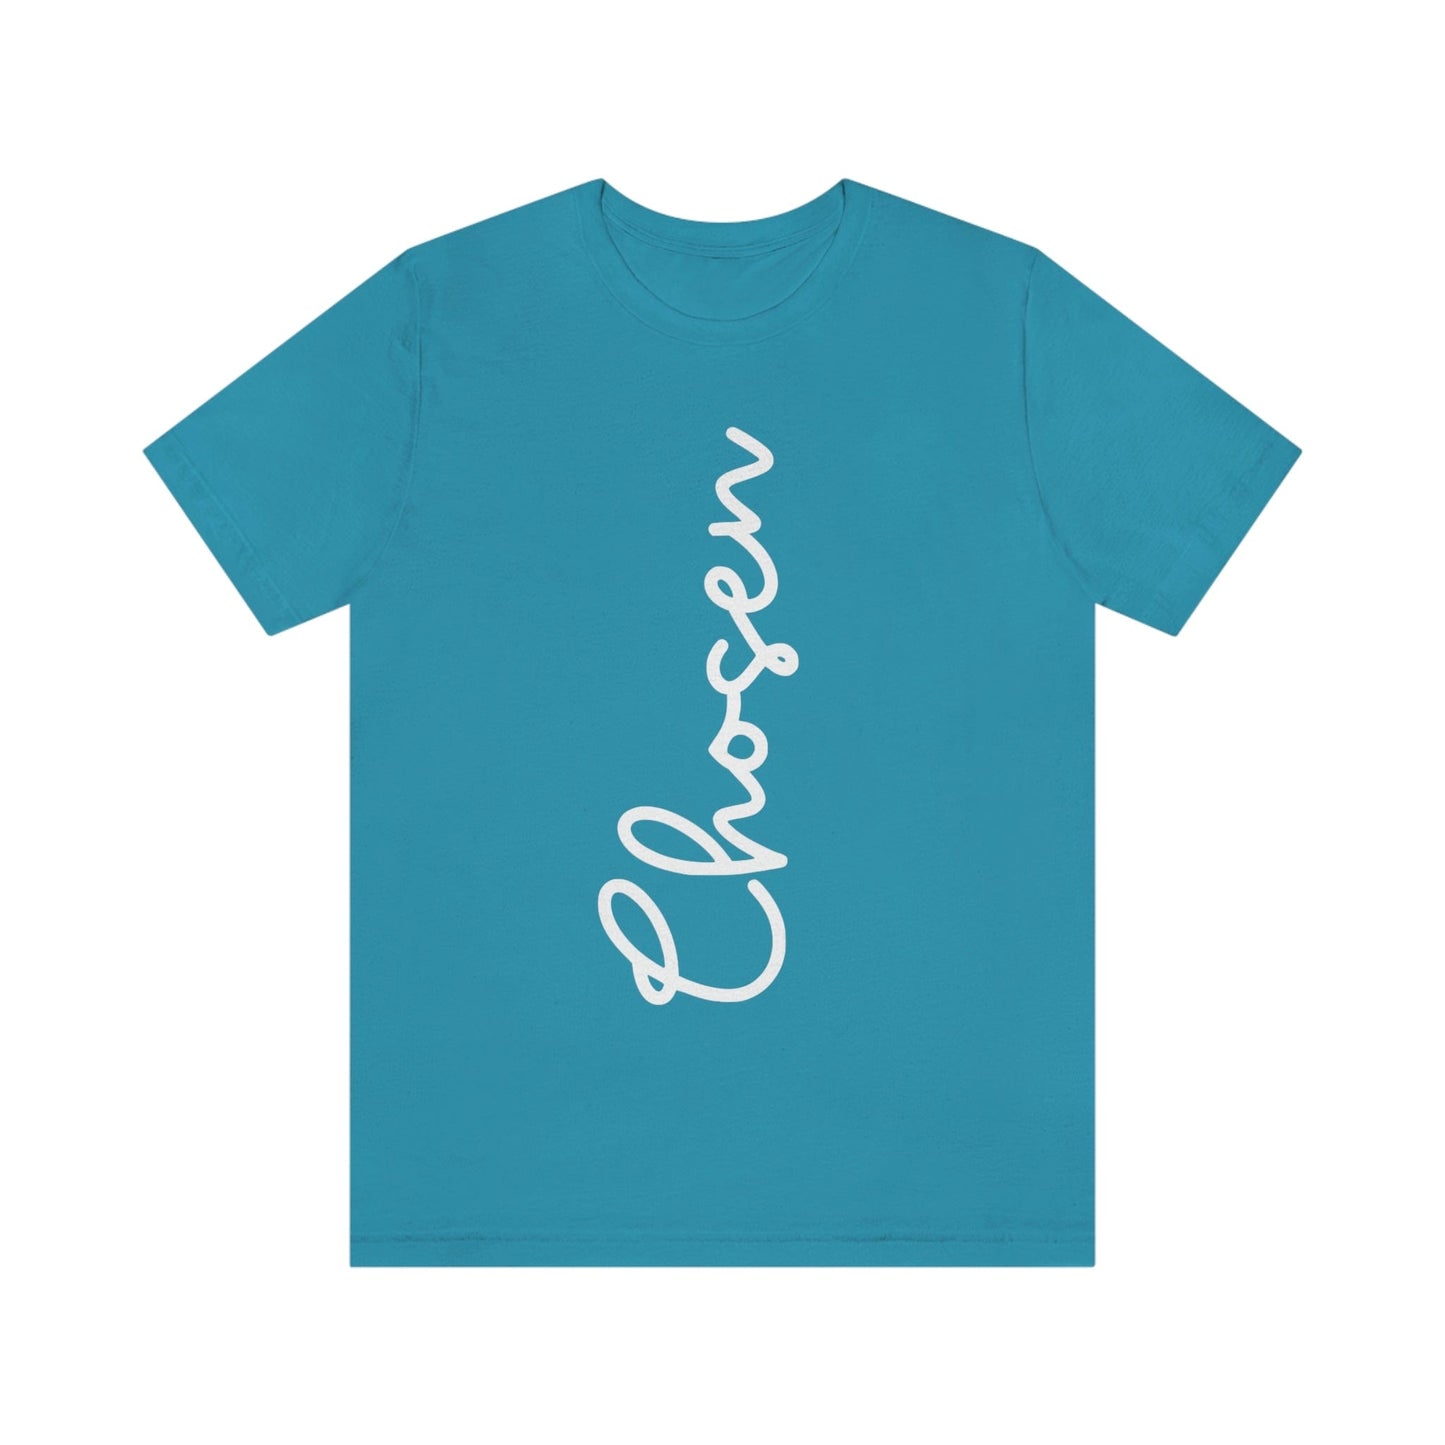 Chosen (Graphic White Text) Unisex Jersey Short Sleeve Tee - Style: Bella+Canvas 3001